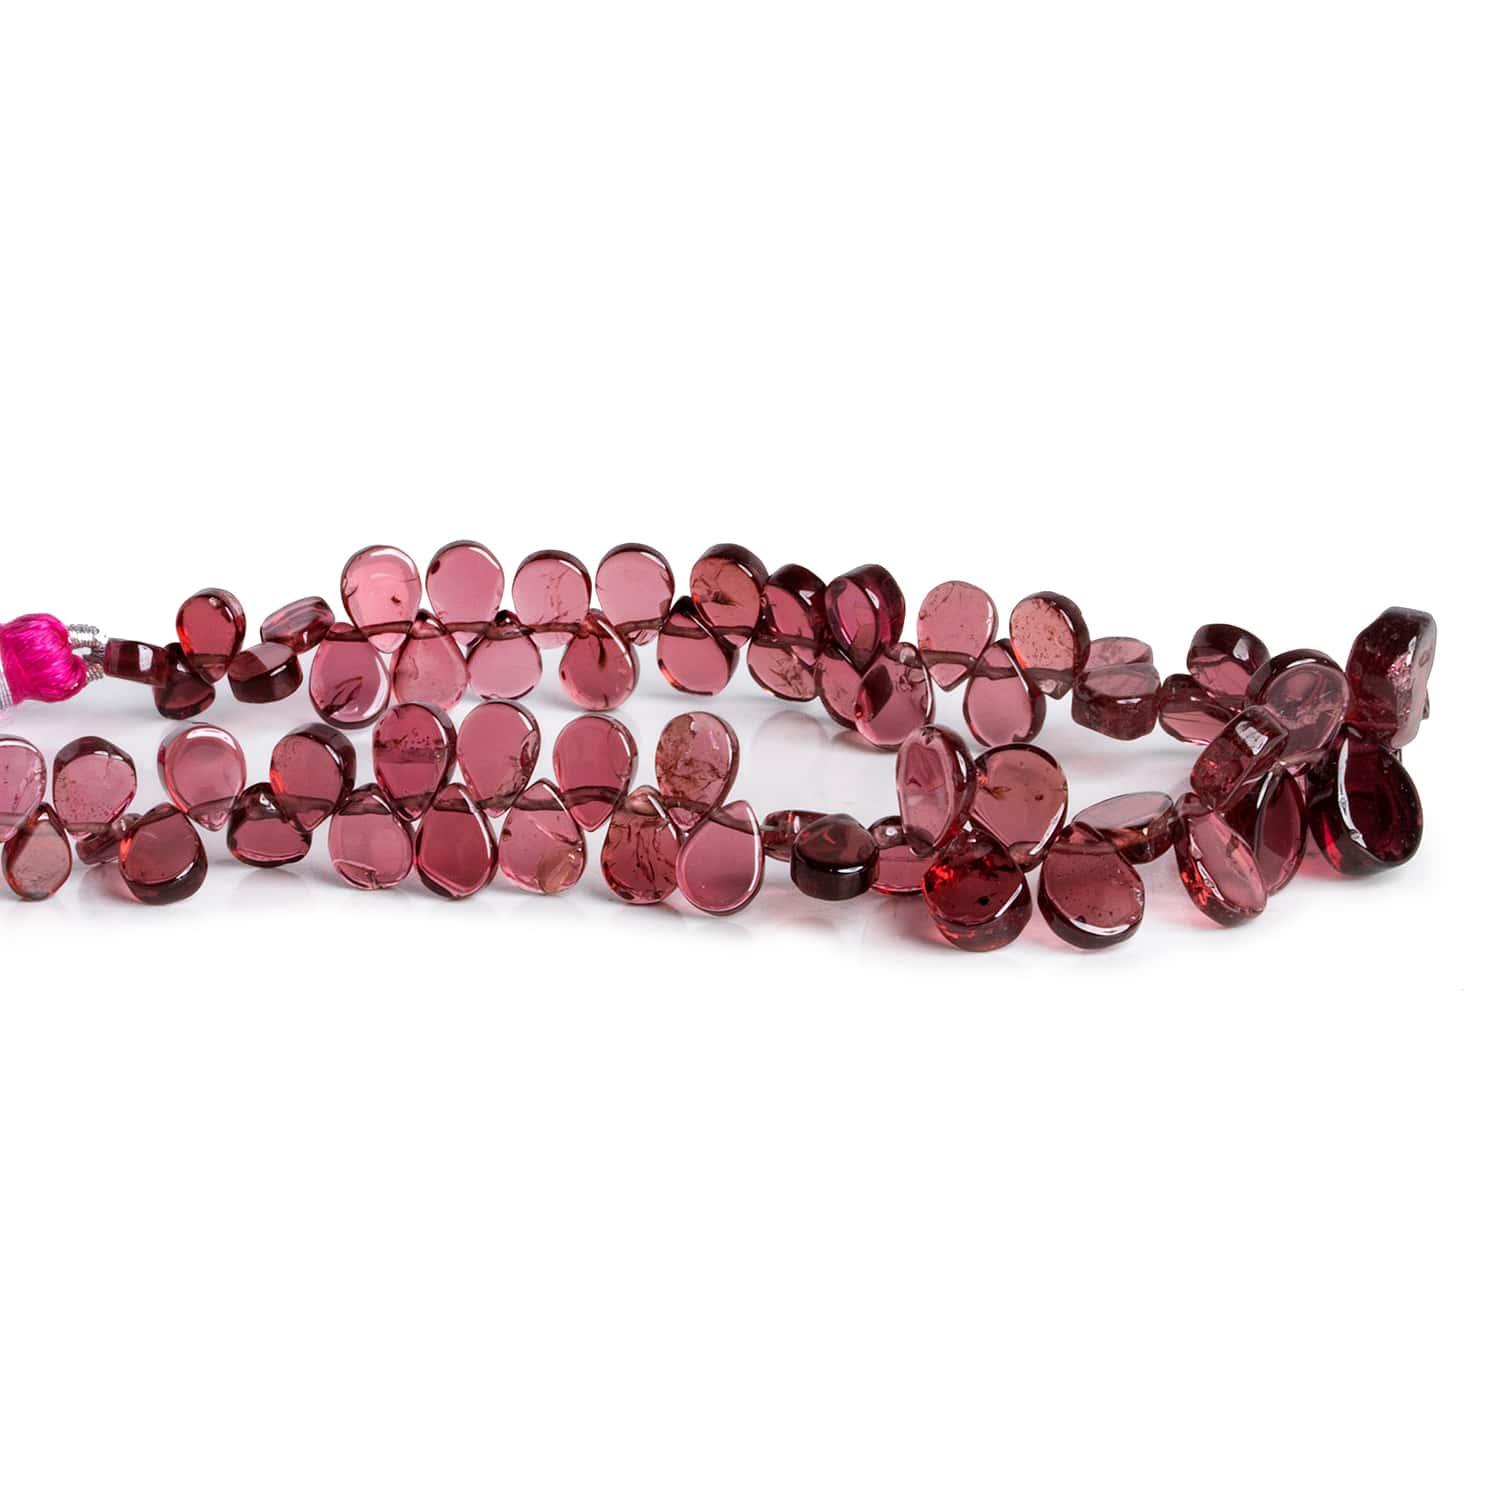 Rhodolite Garnet Plain Pears 7 inch 55 beads